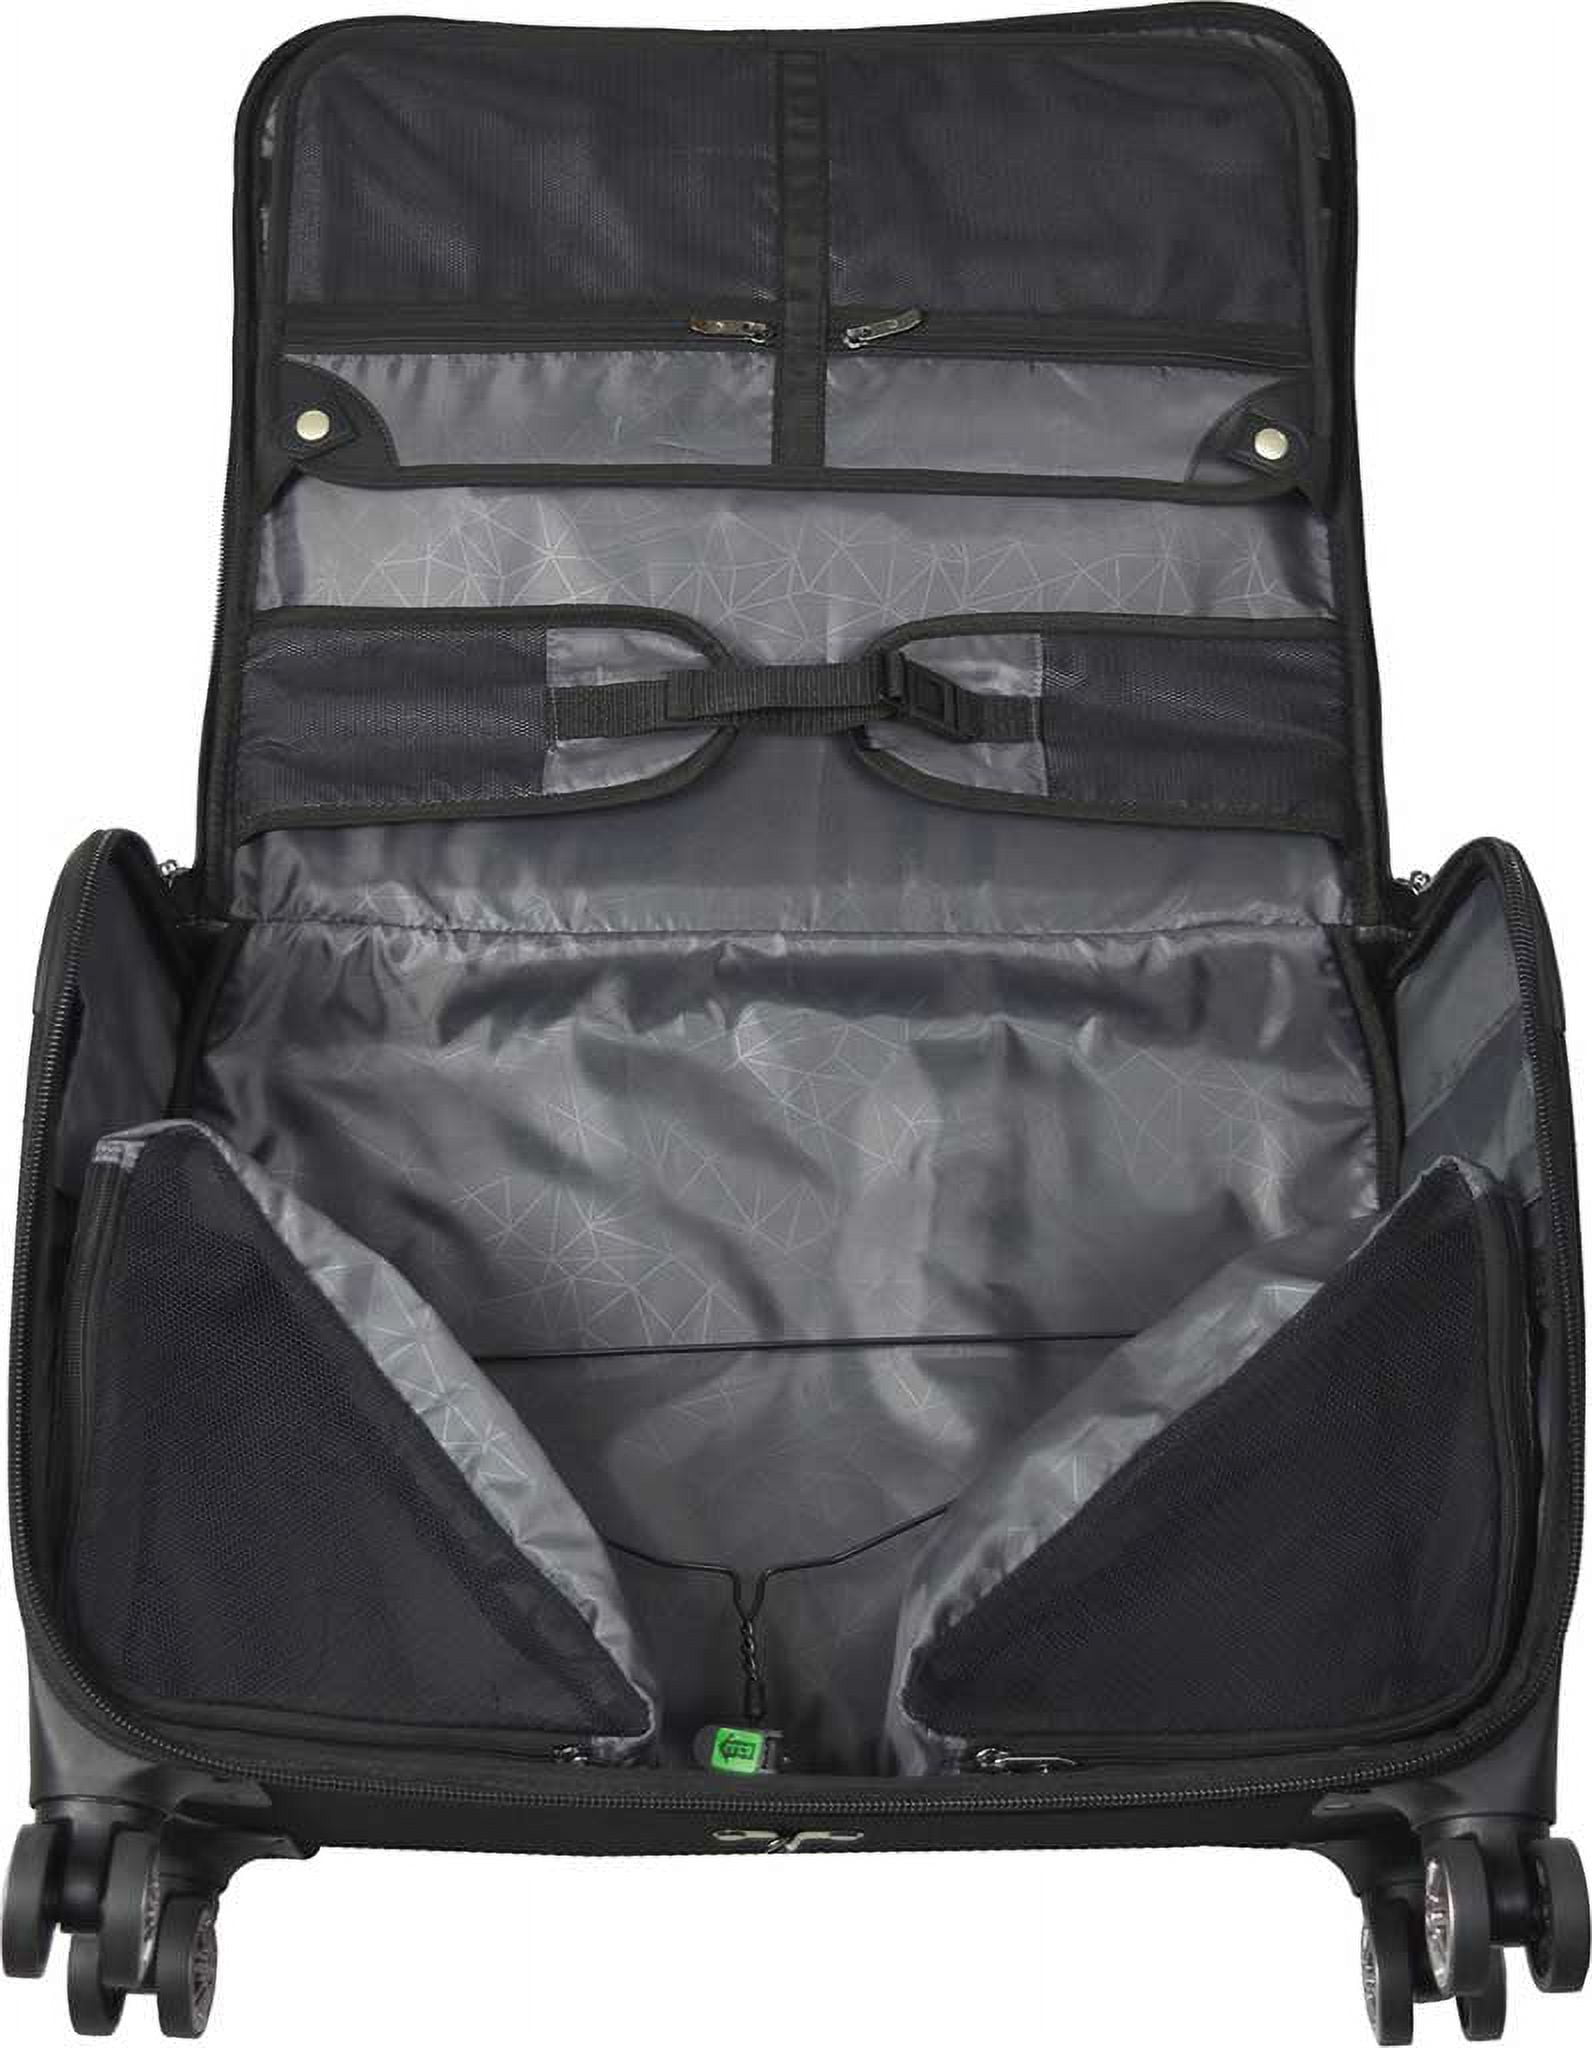 Carry-On Wheeled Garment Bag — Travel Style Luggage